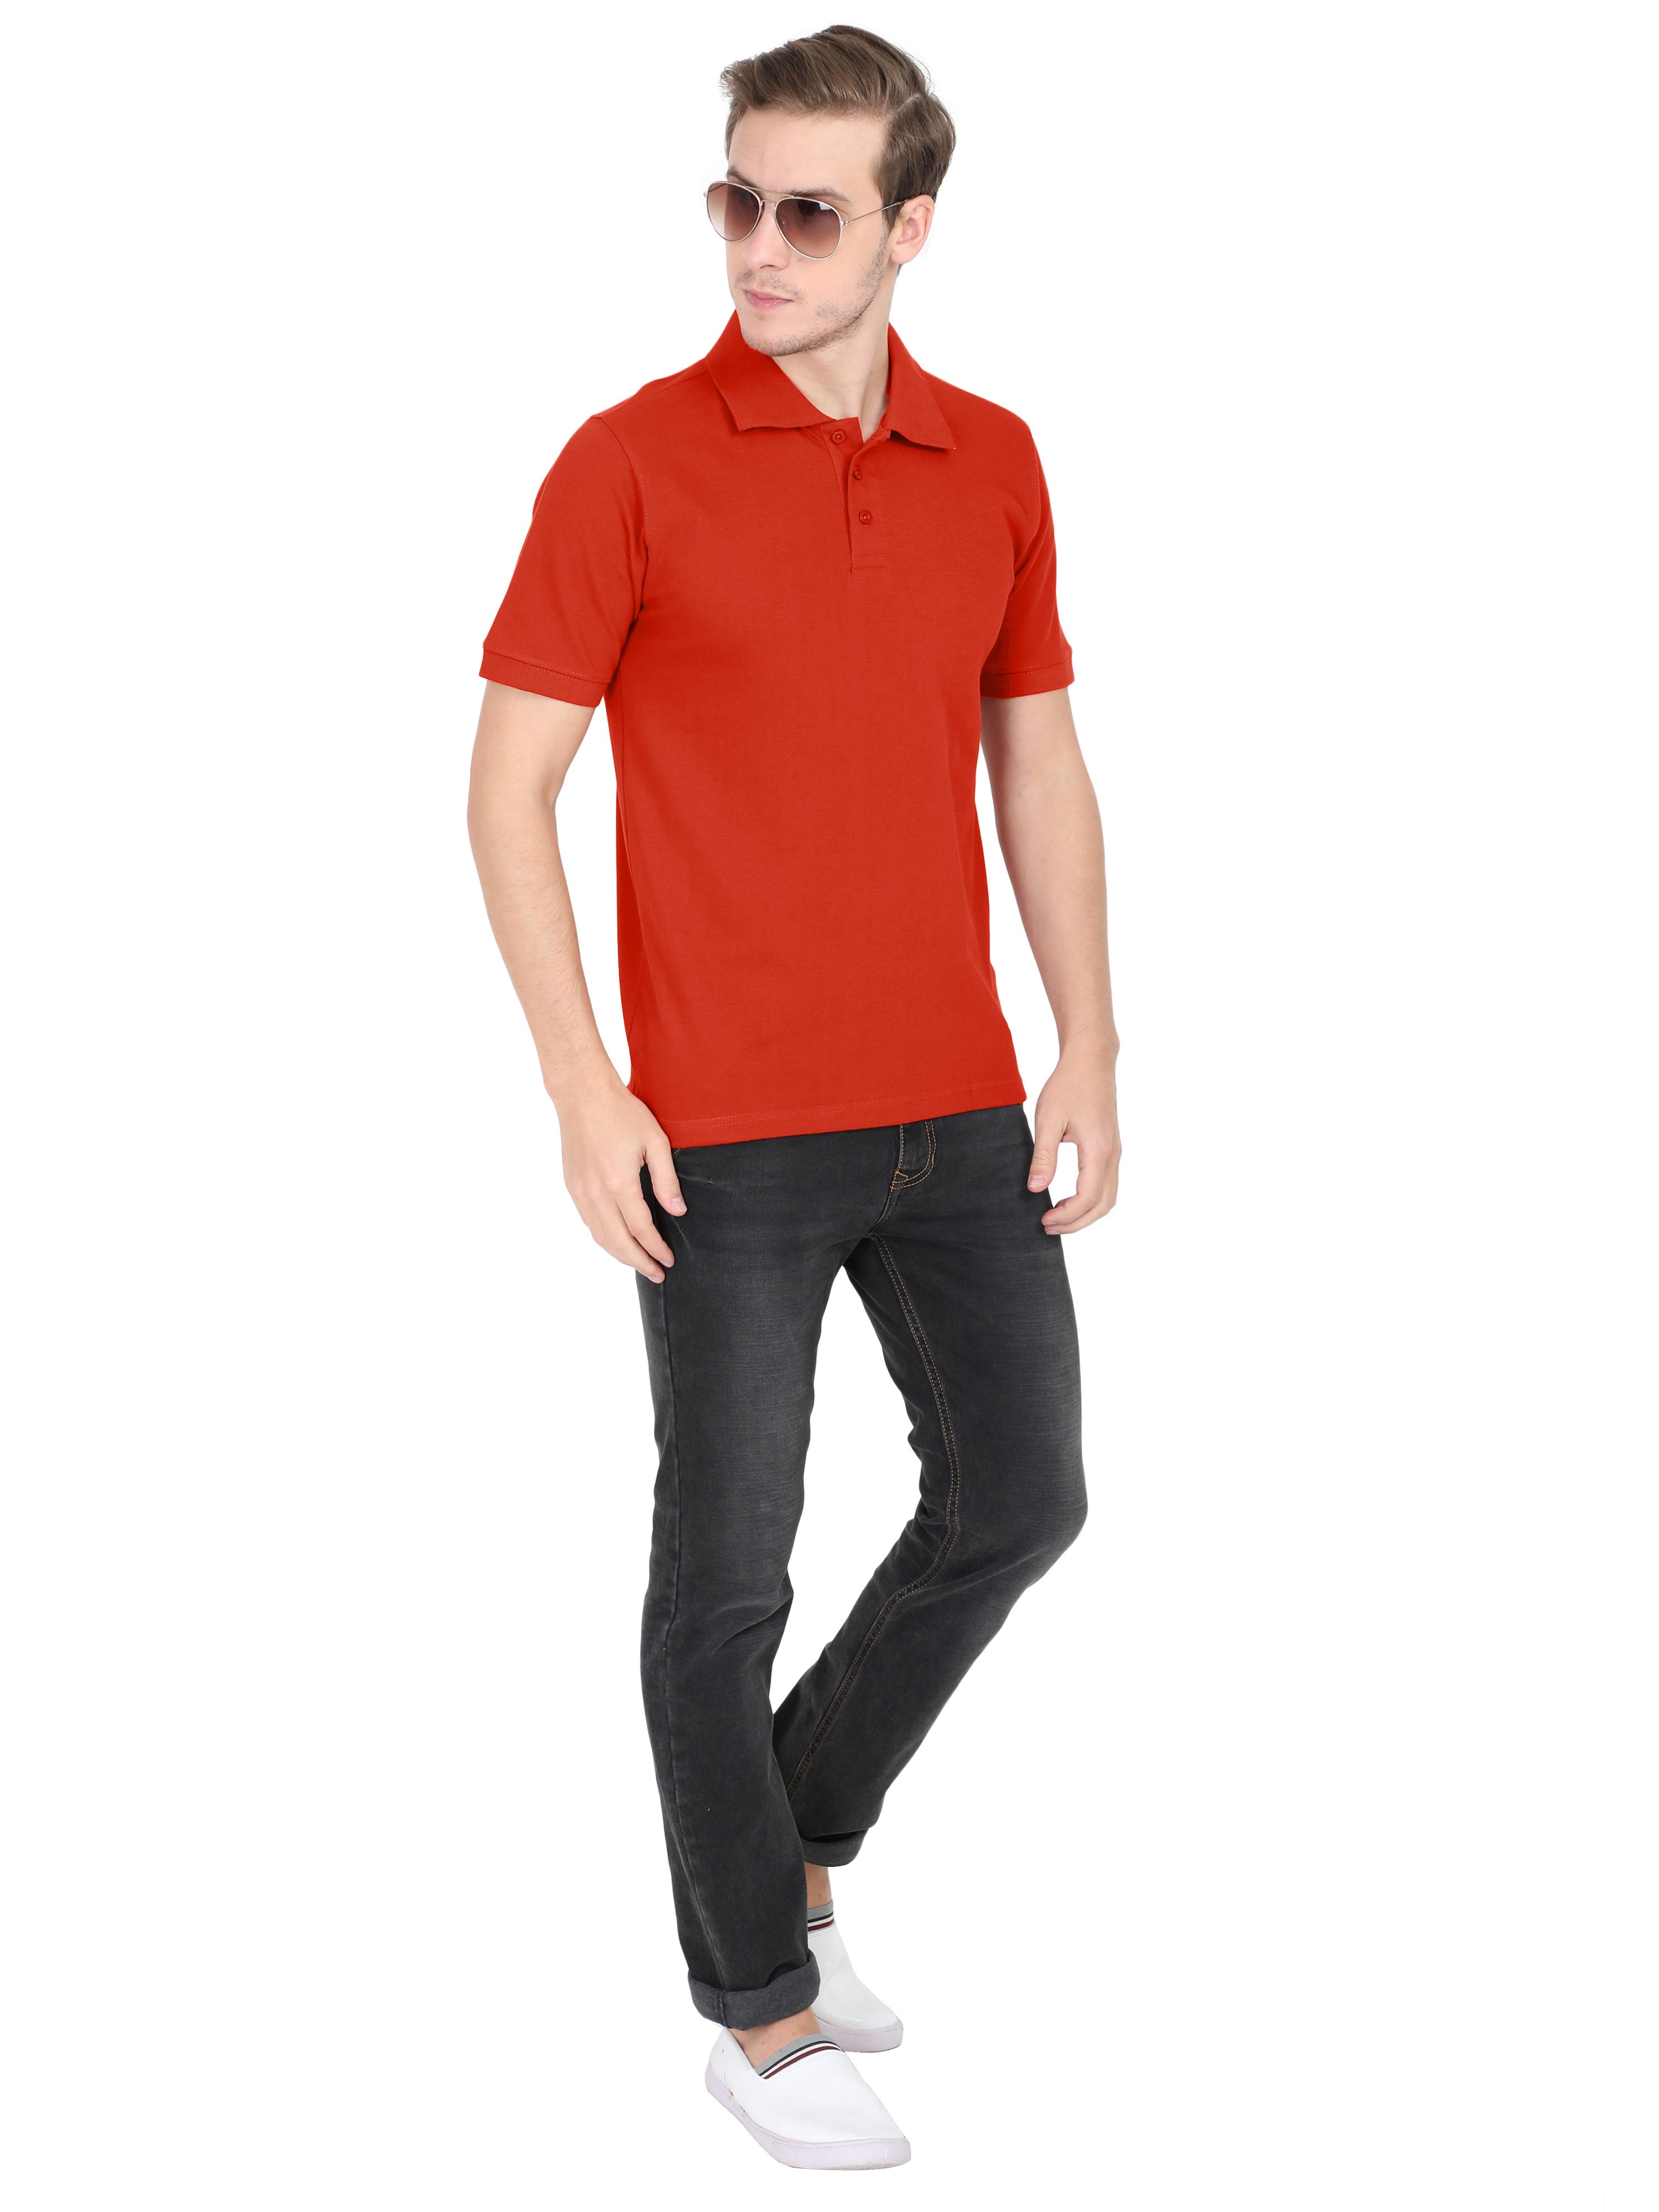 Polos: Brick Red Premium T-shirt